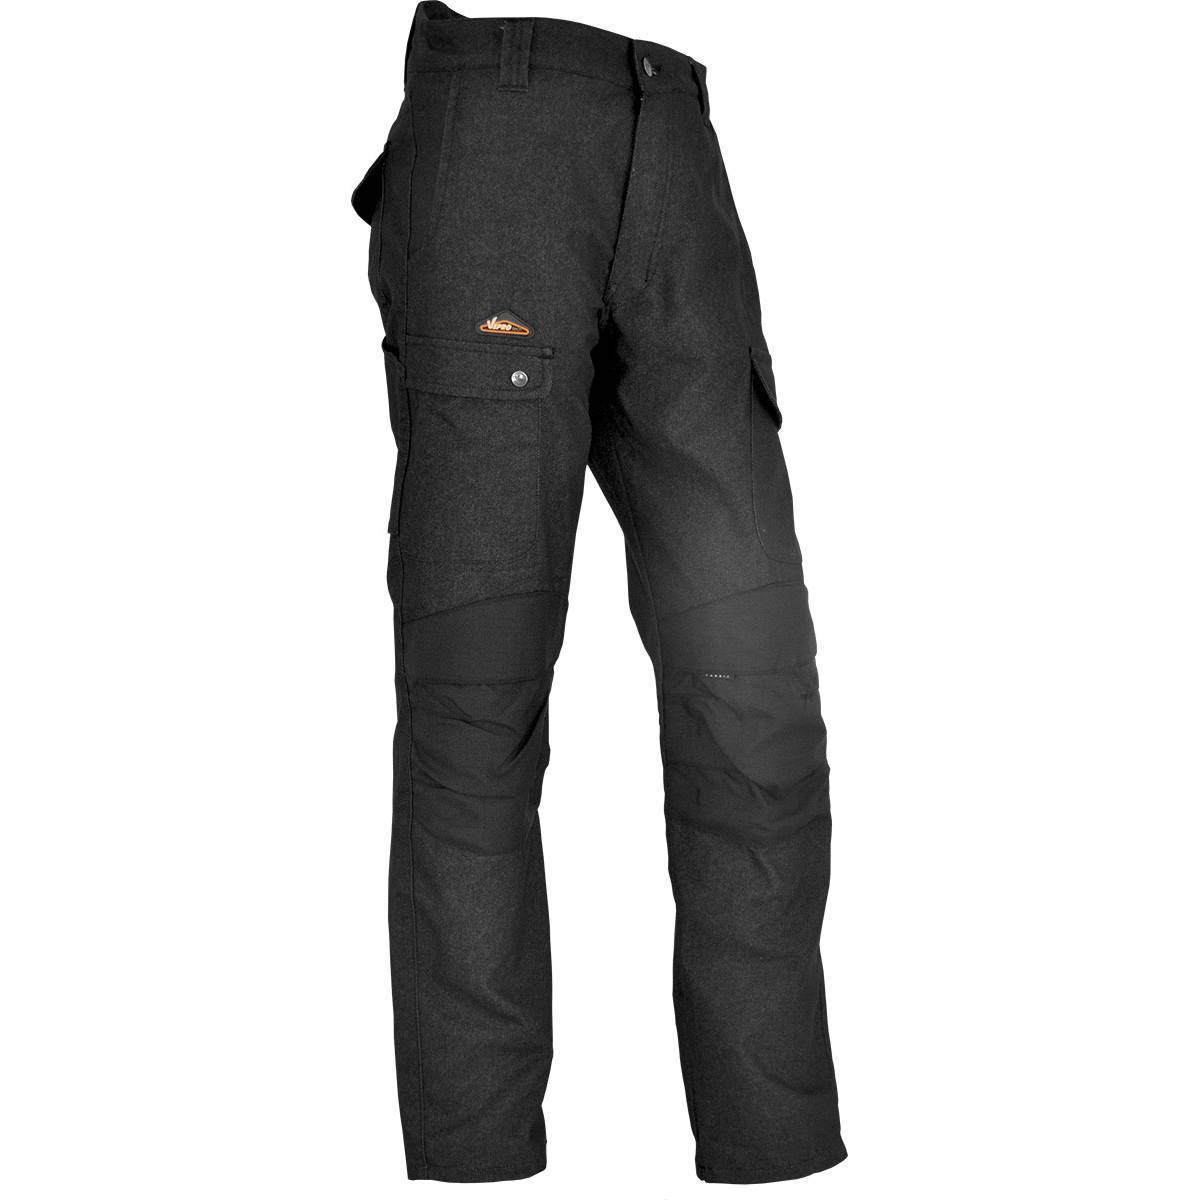 ENDU work trousers size 44, black